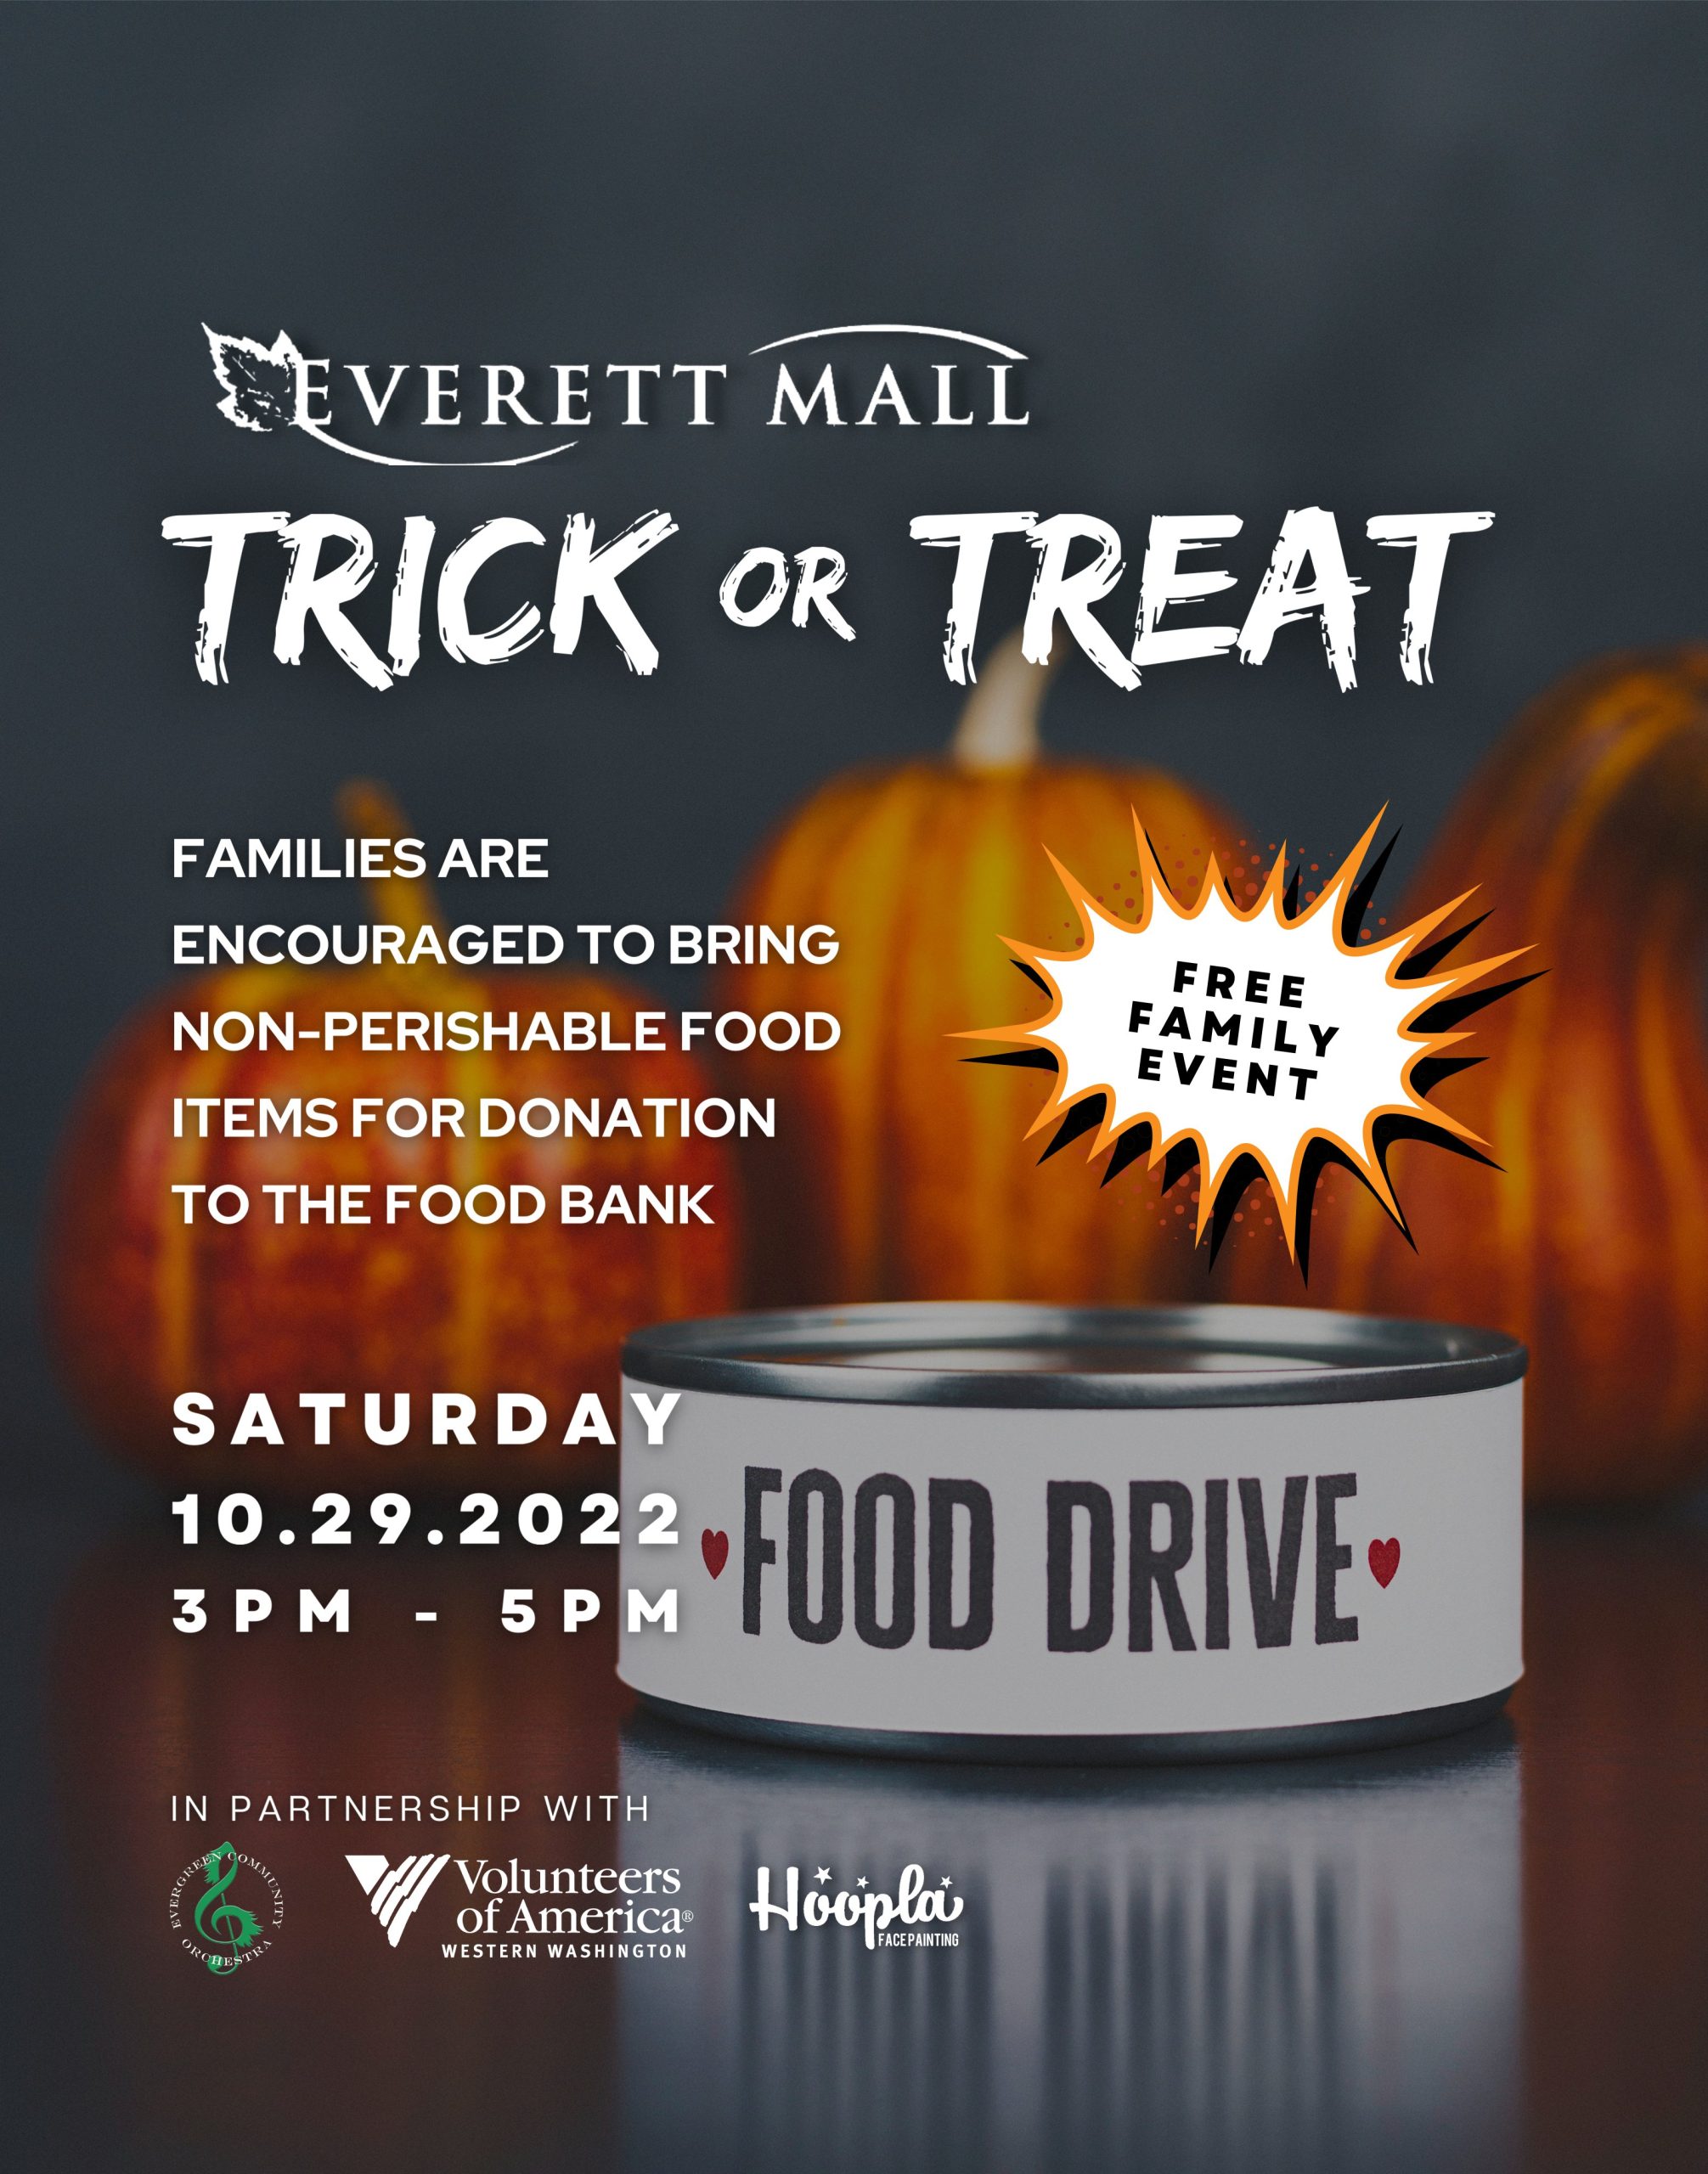 Free Family TrickOrTreat Event Everett Mall